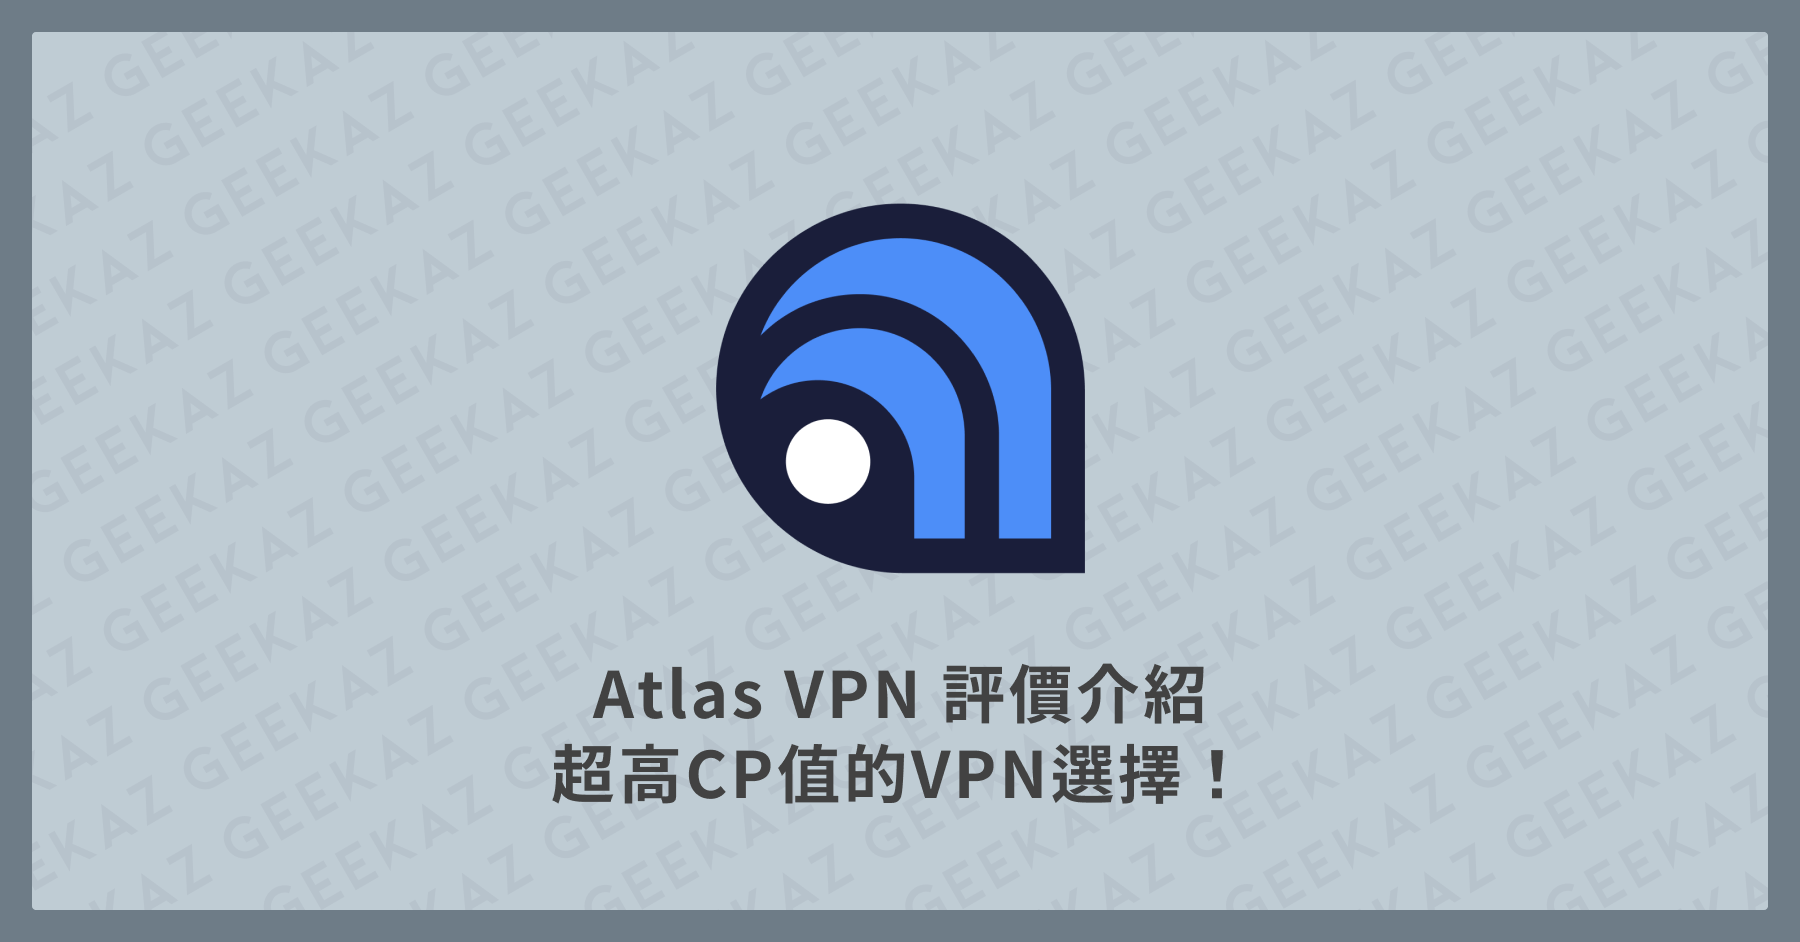 Atlas VPN 評價介紹